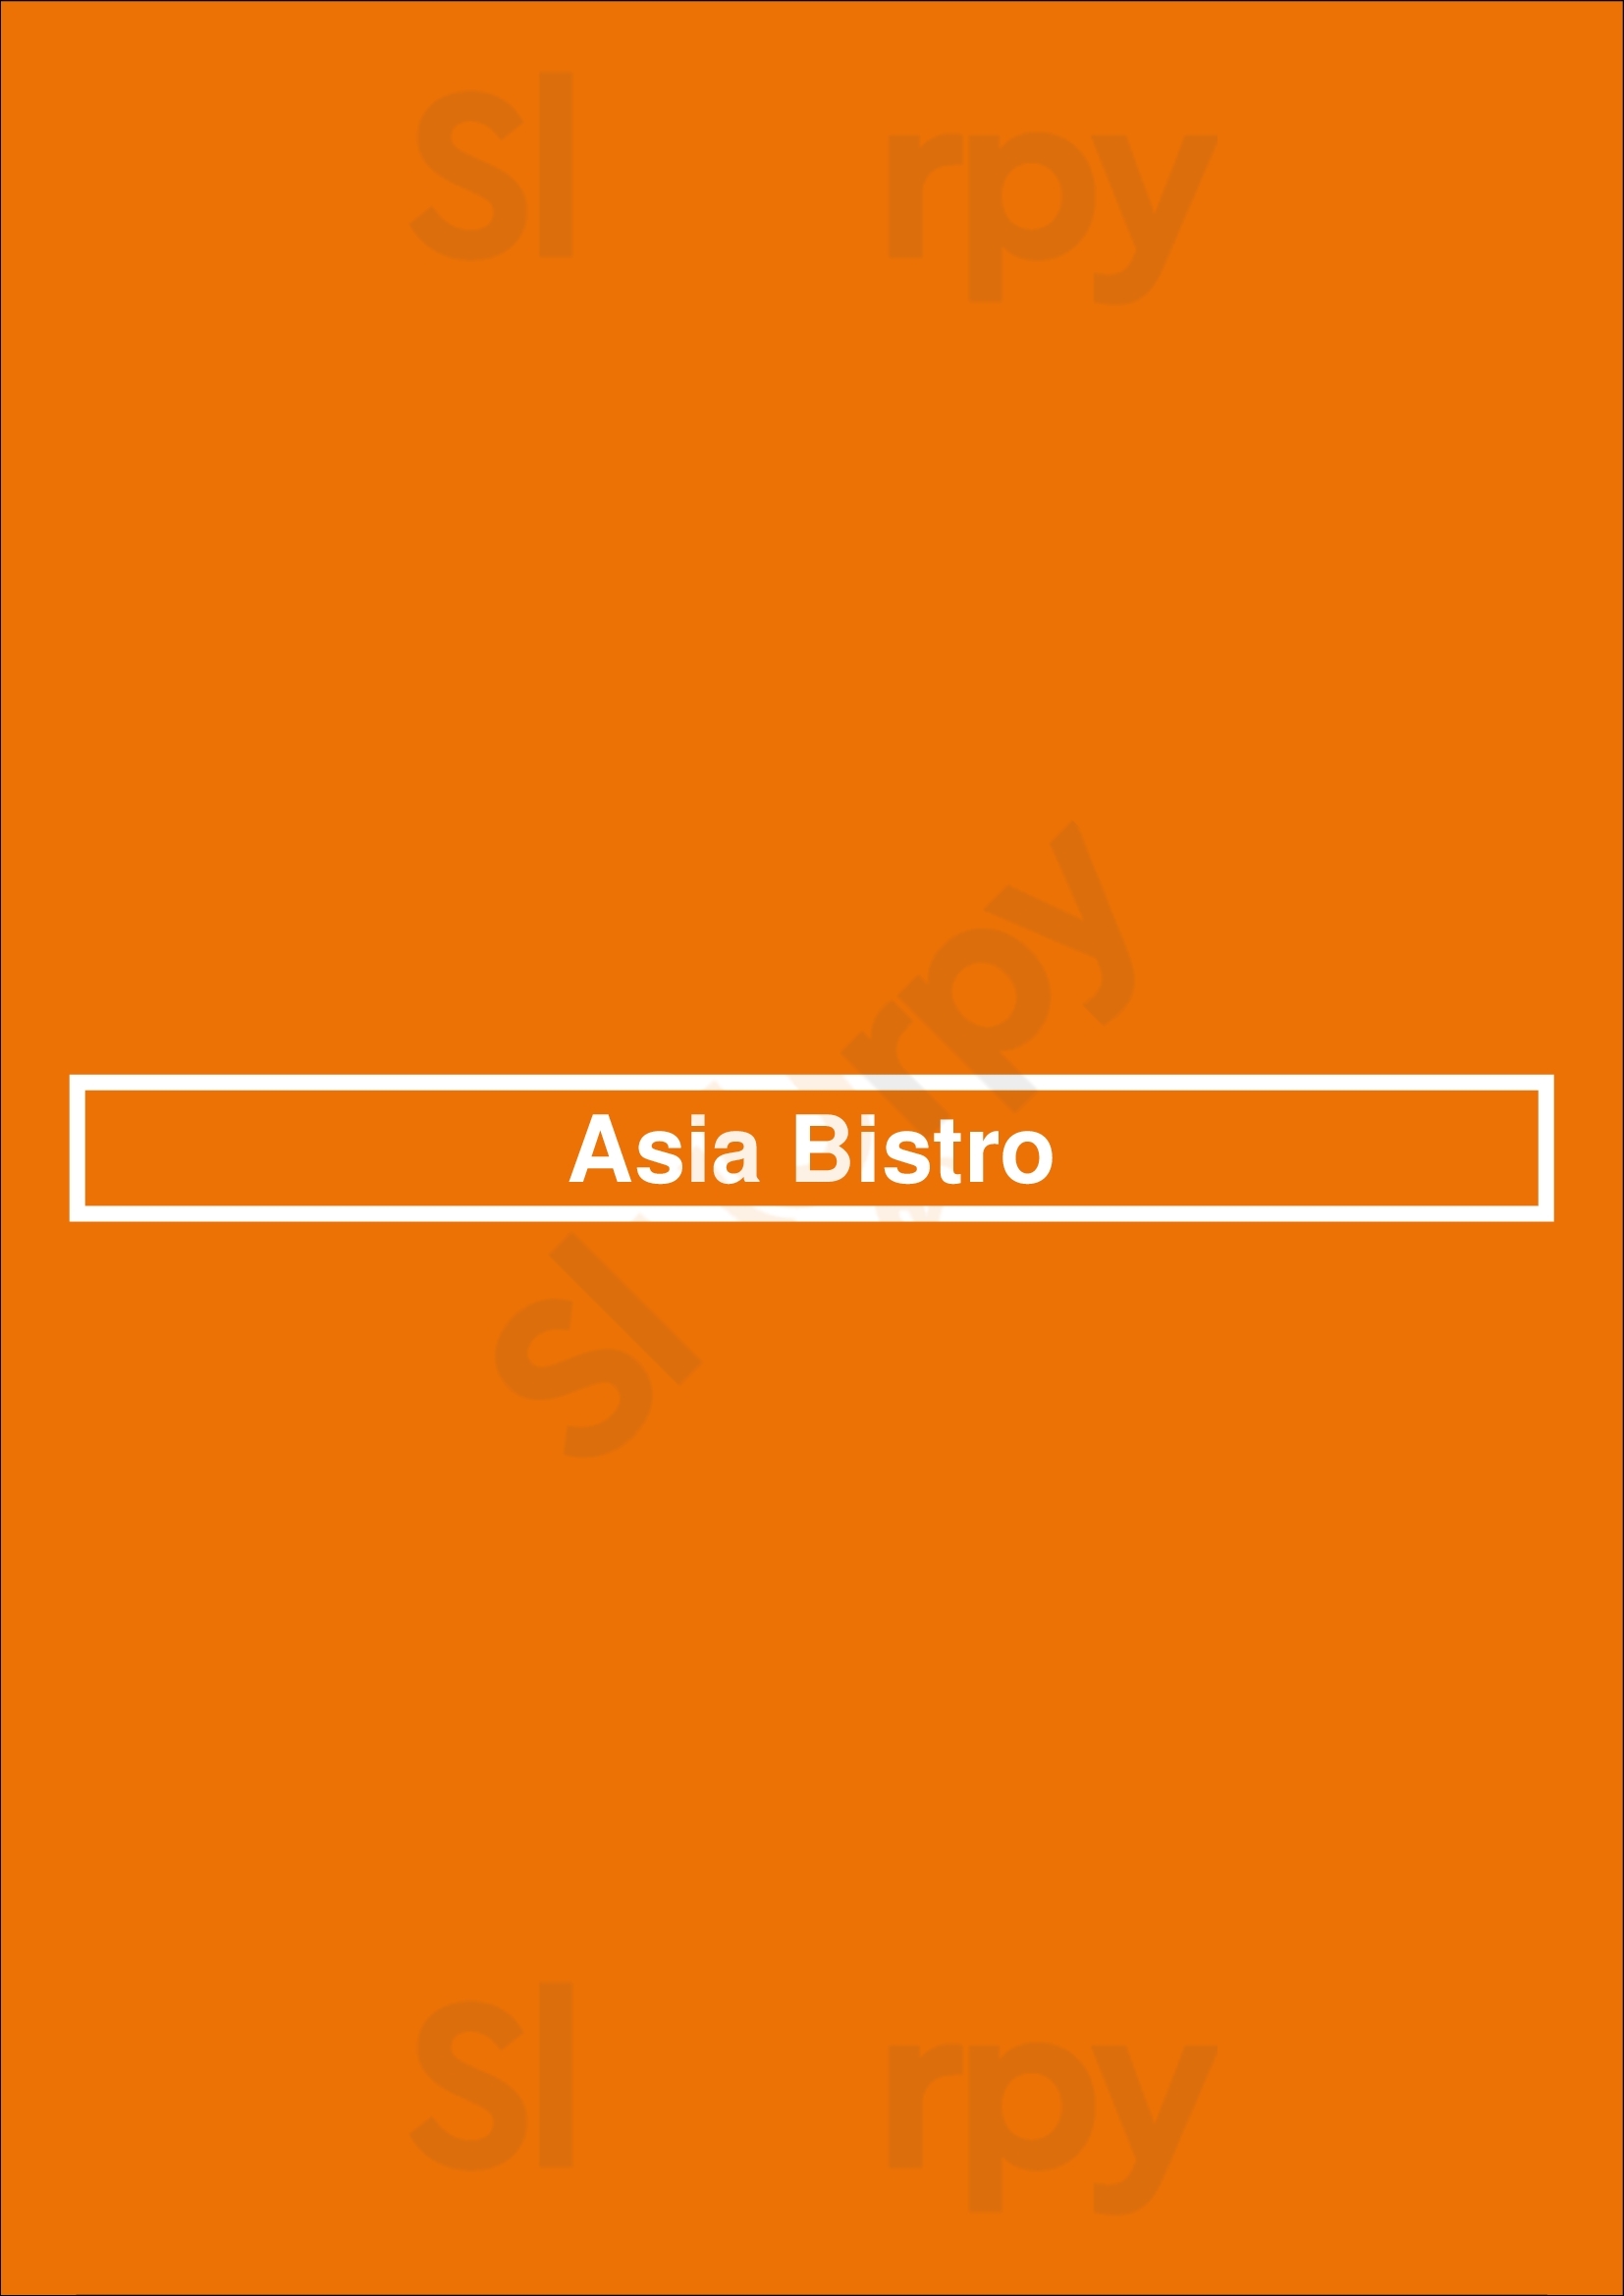 Asia Bistro Berkel en Rodenrijs Menu - 1